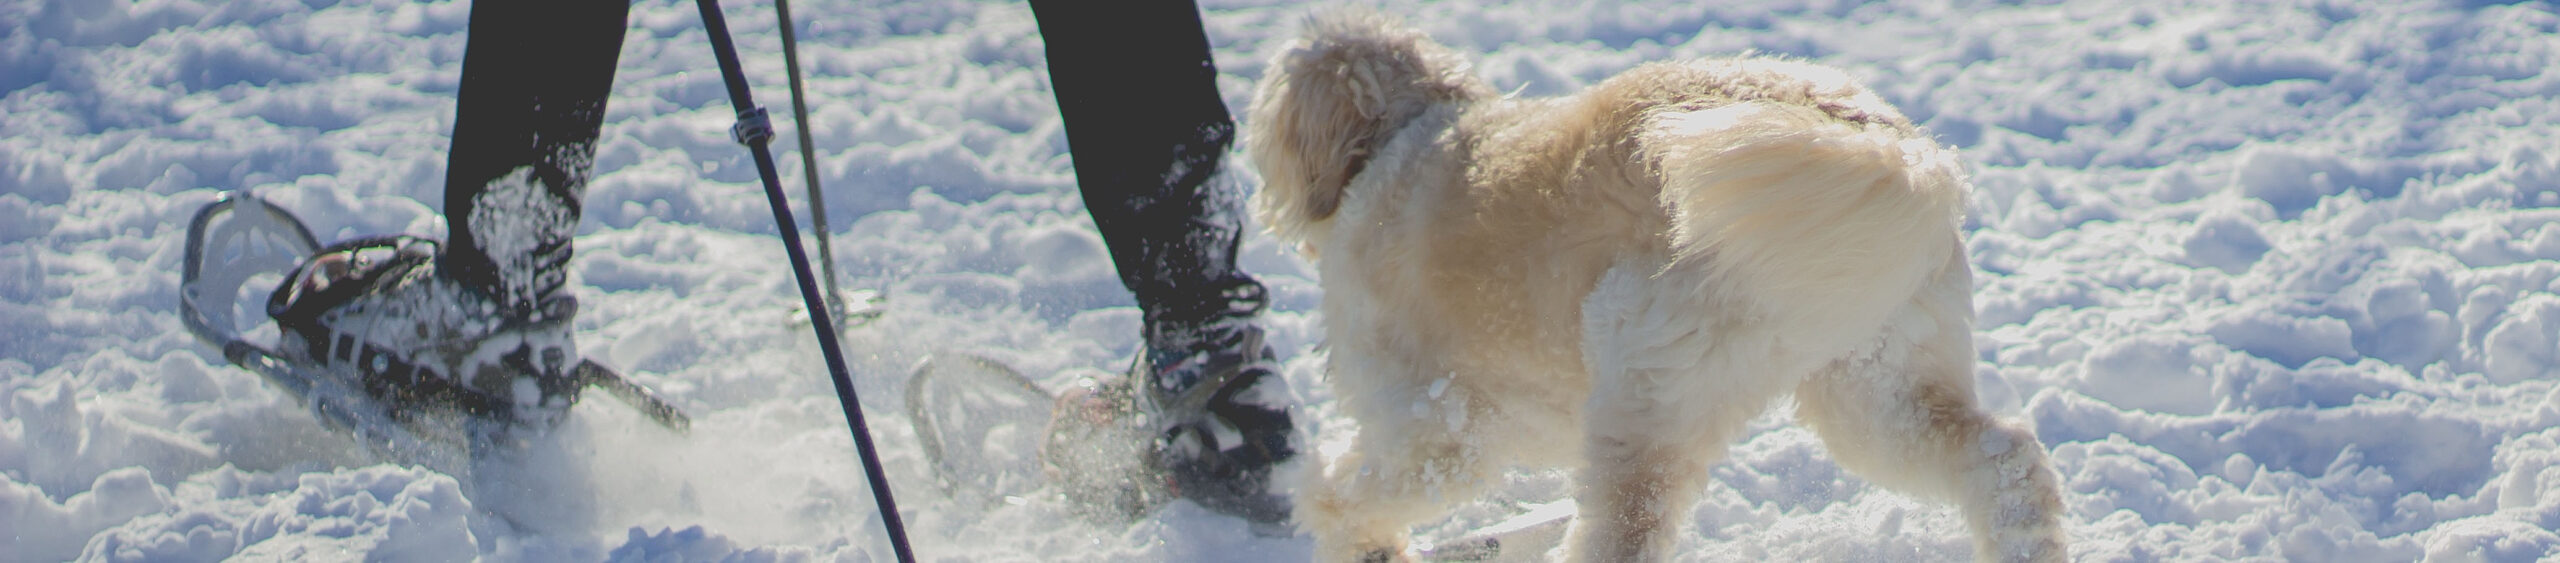 Dog following snowshoer in winter